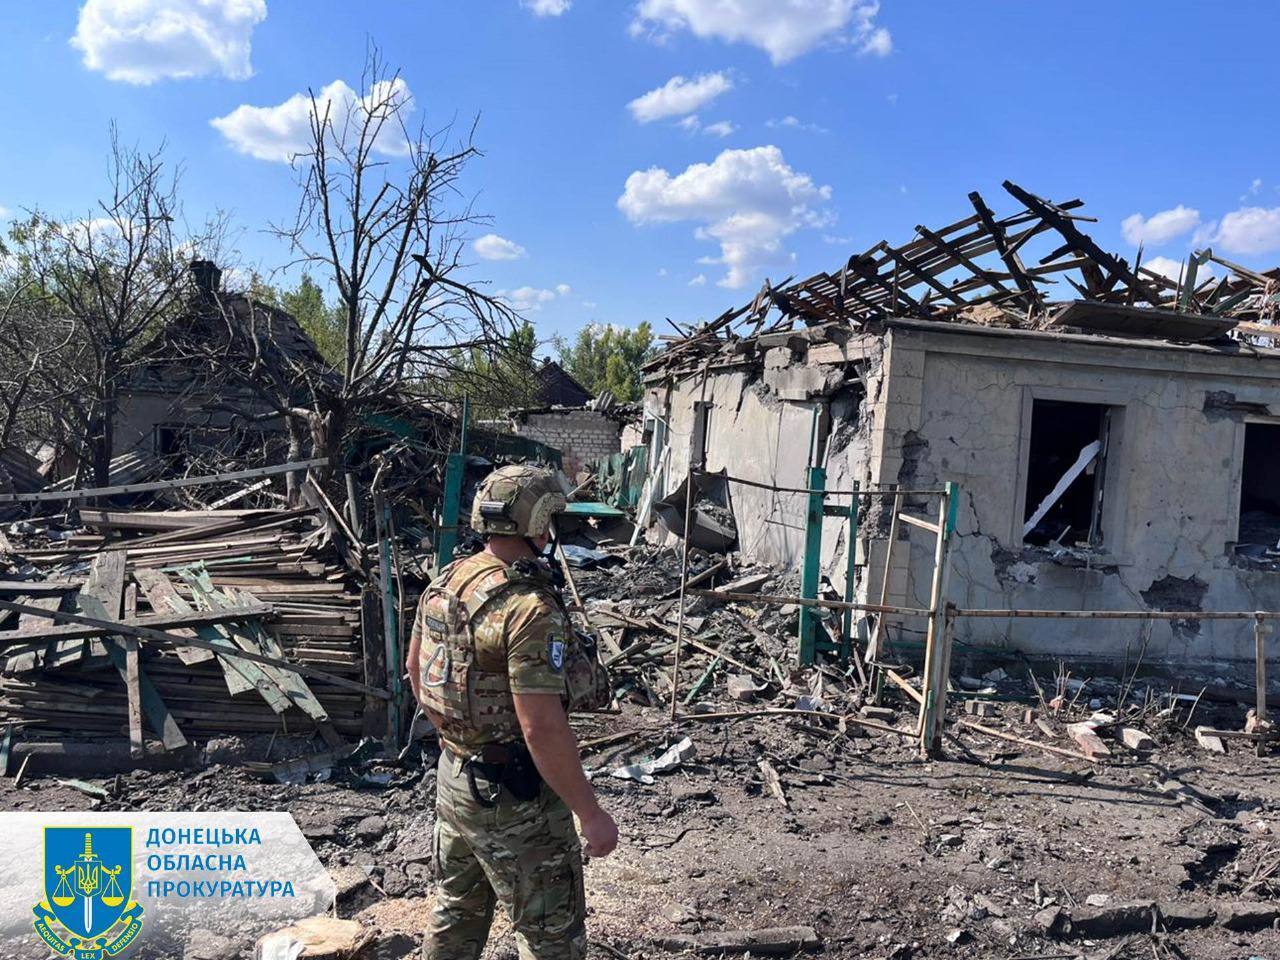 Russians shell Avdiivka and Toretsk in Donbas: two civilians killed. Photo